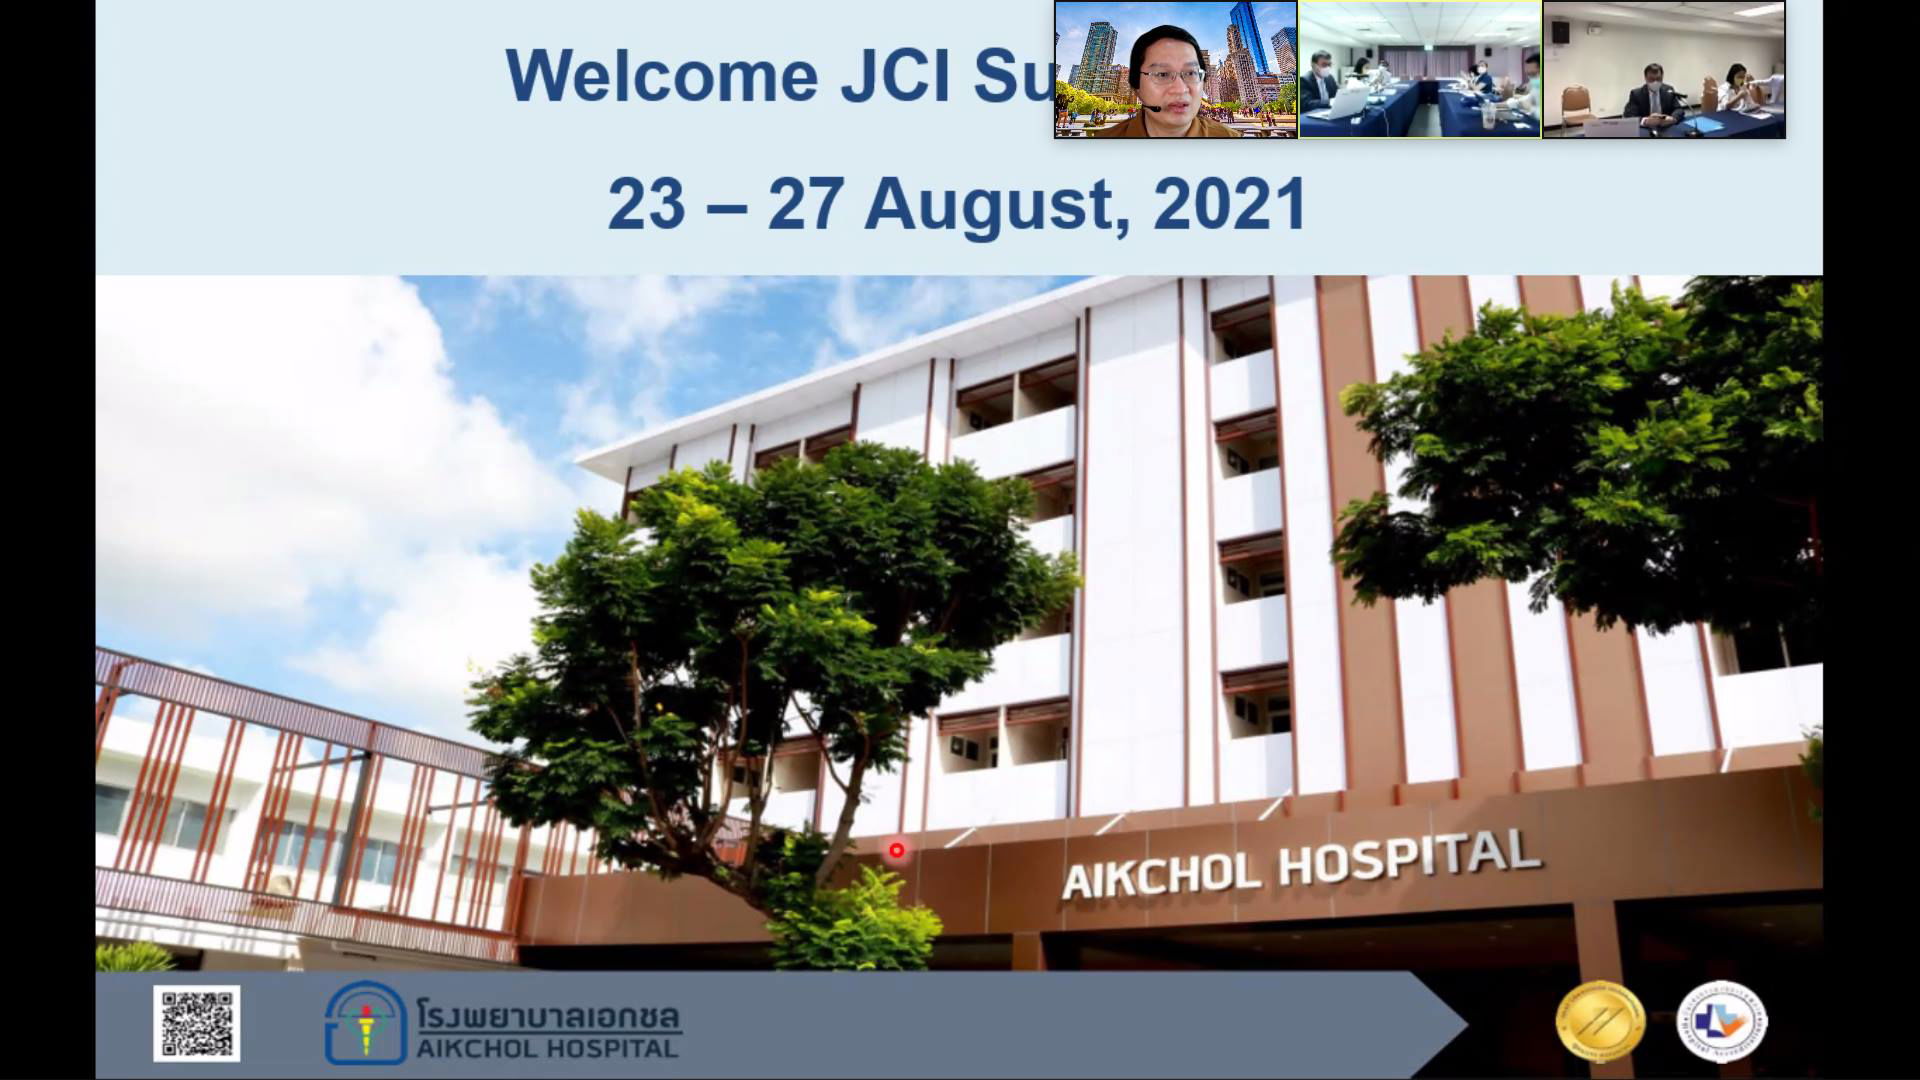 JCI Online Advisory : Aikchol Hospital